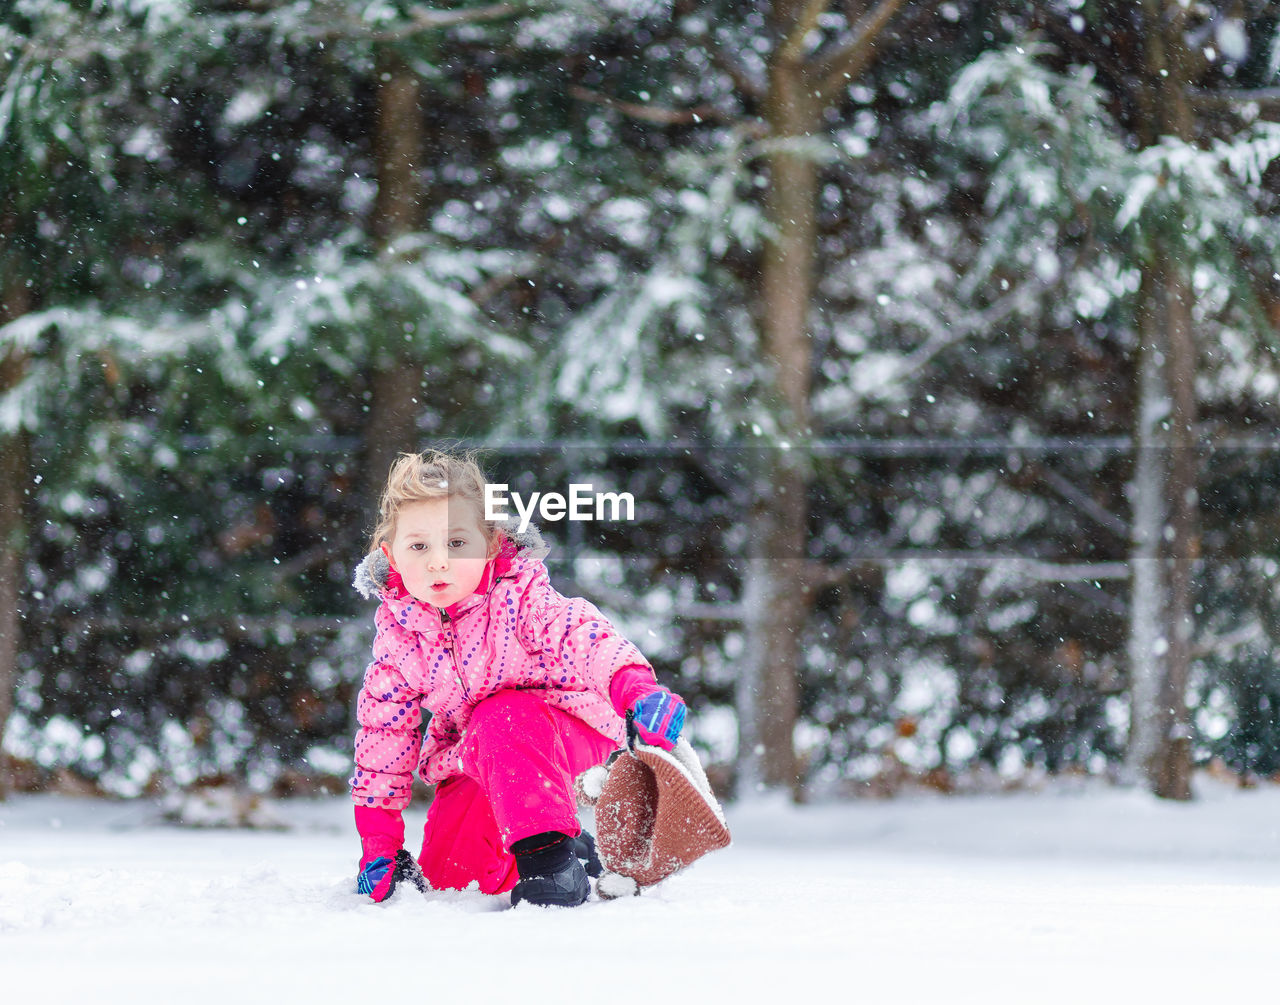 Young girl child kneeling in snow storm during light flurries in winter